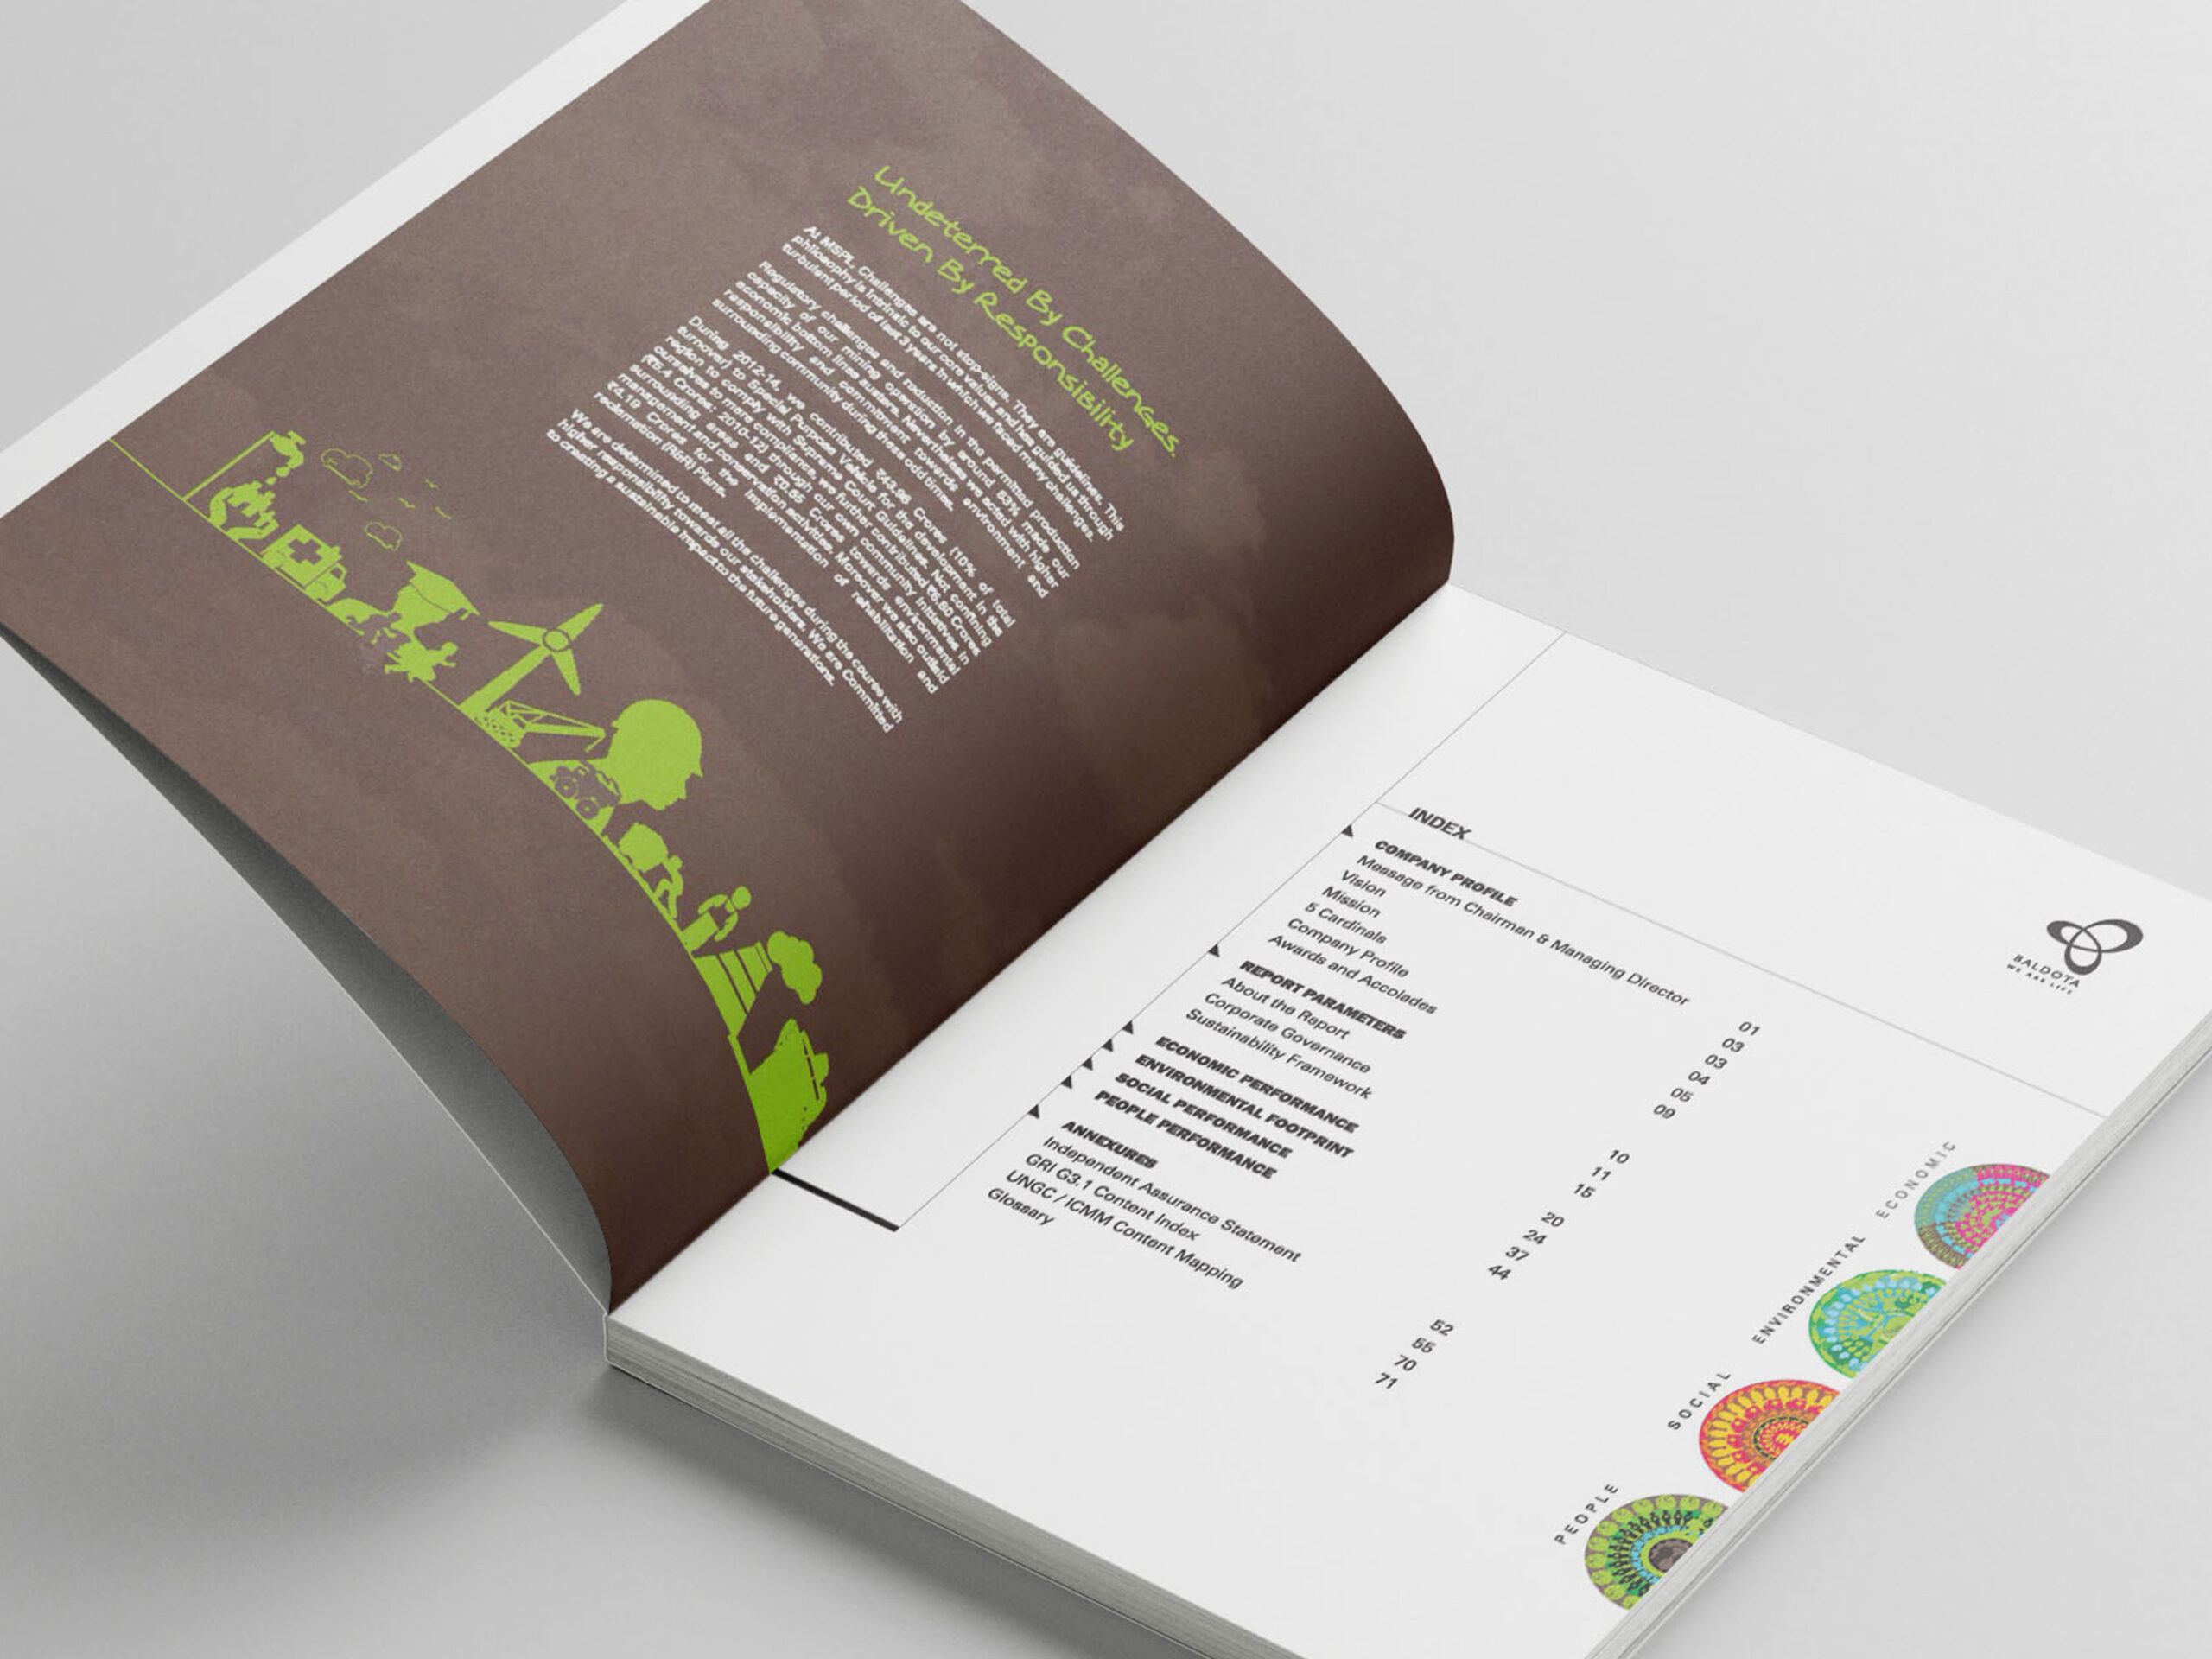 MSPL Corporate Sustainability Report 2012-14